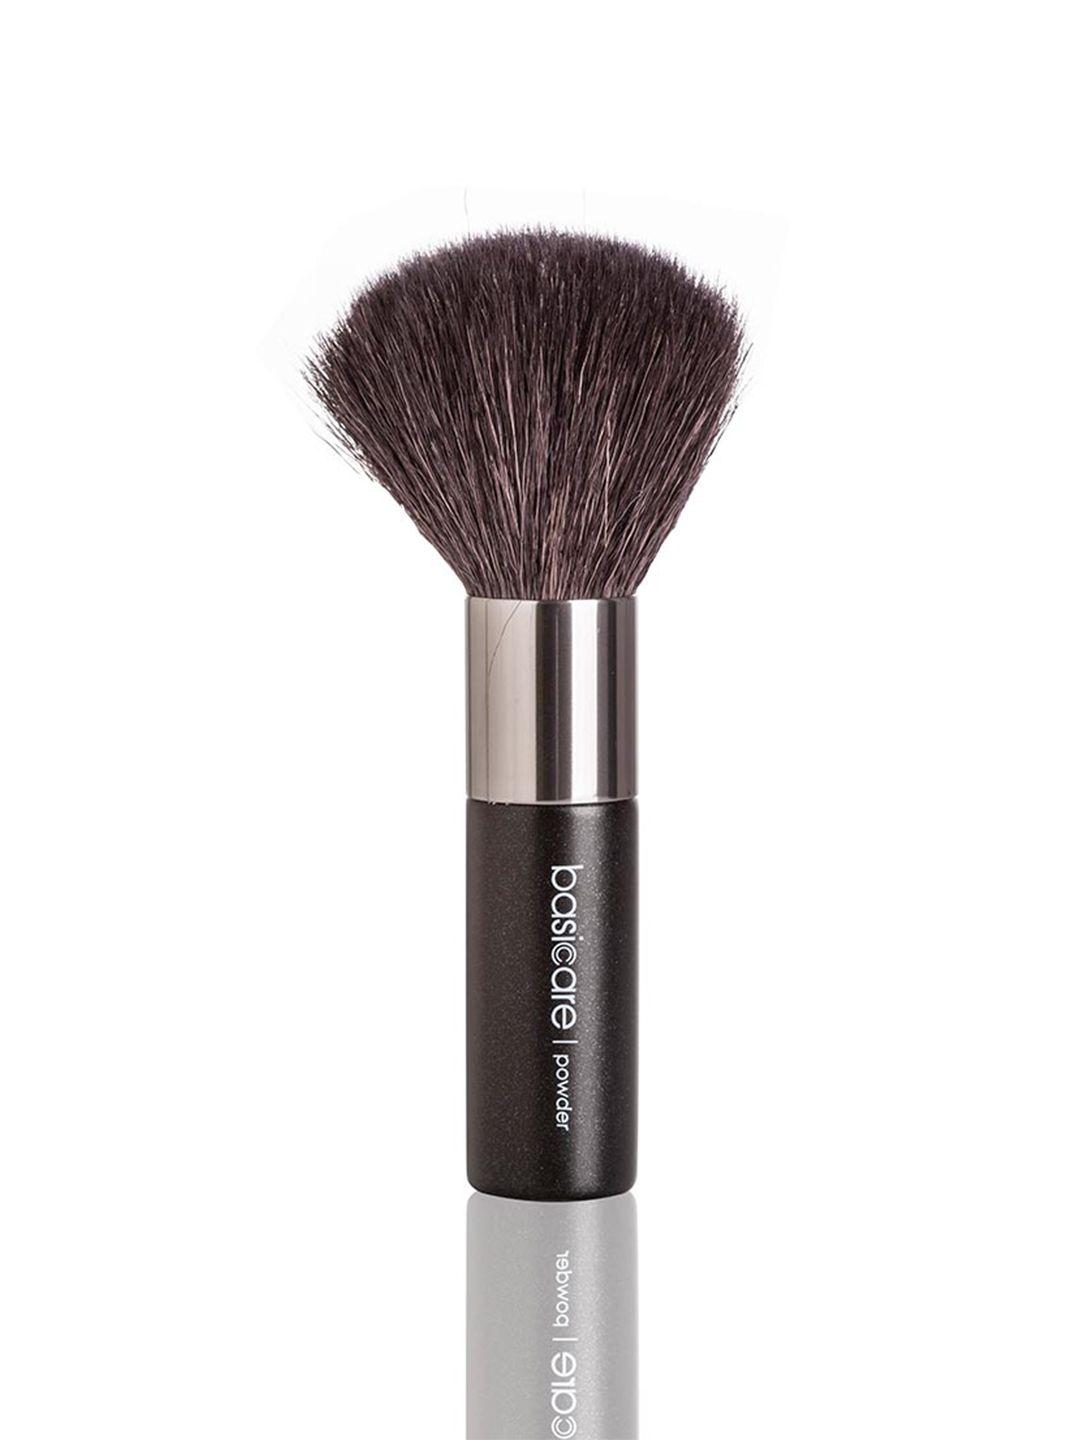 basicare-compact-powder-makeup-brush